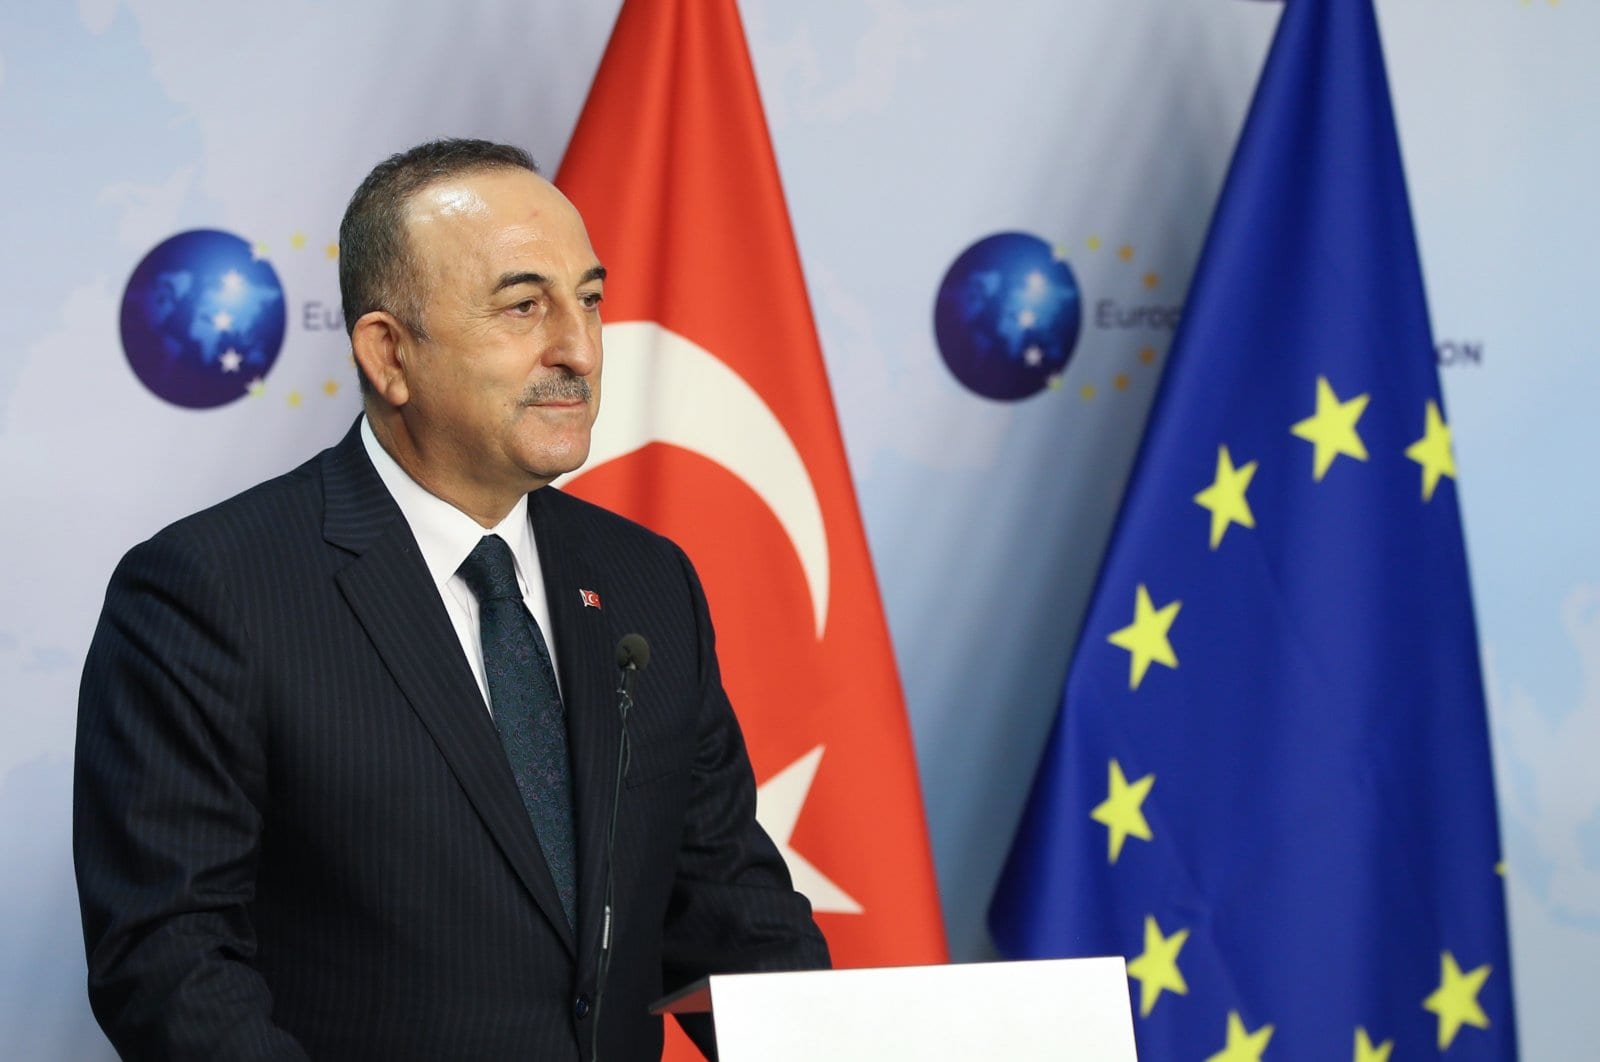 Turkish FM Çavuşoğlu embarks on historic visit to Brussels to consolidate Turkey-EU ties